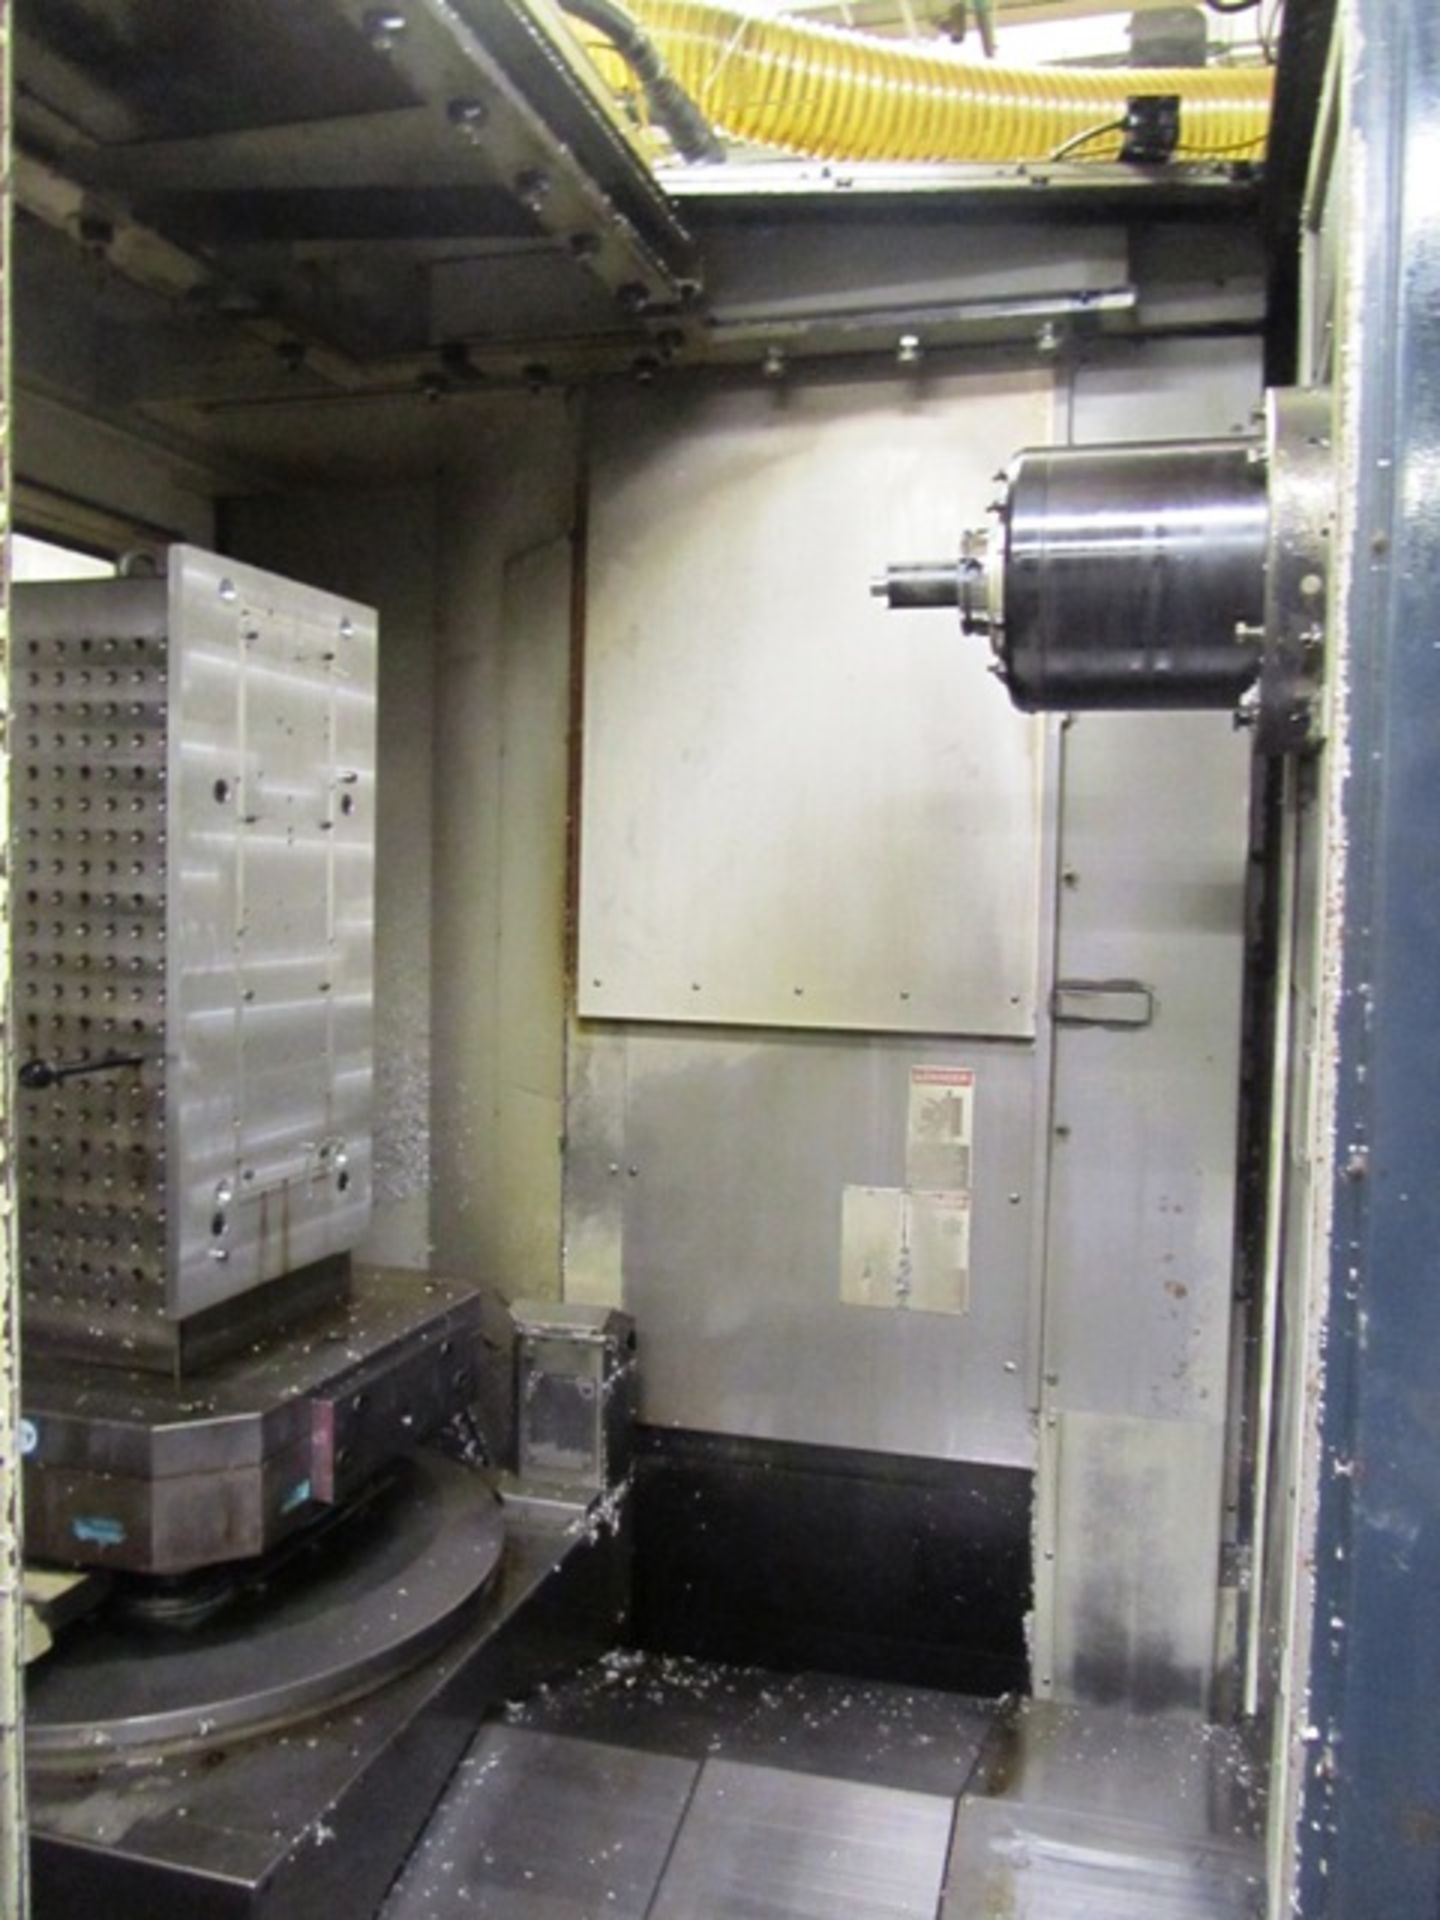 Makino A77 CNC Horizontal Machining Center - Image 4 of 5